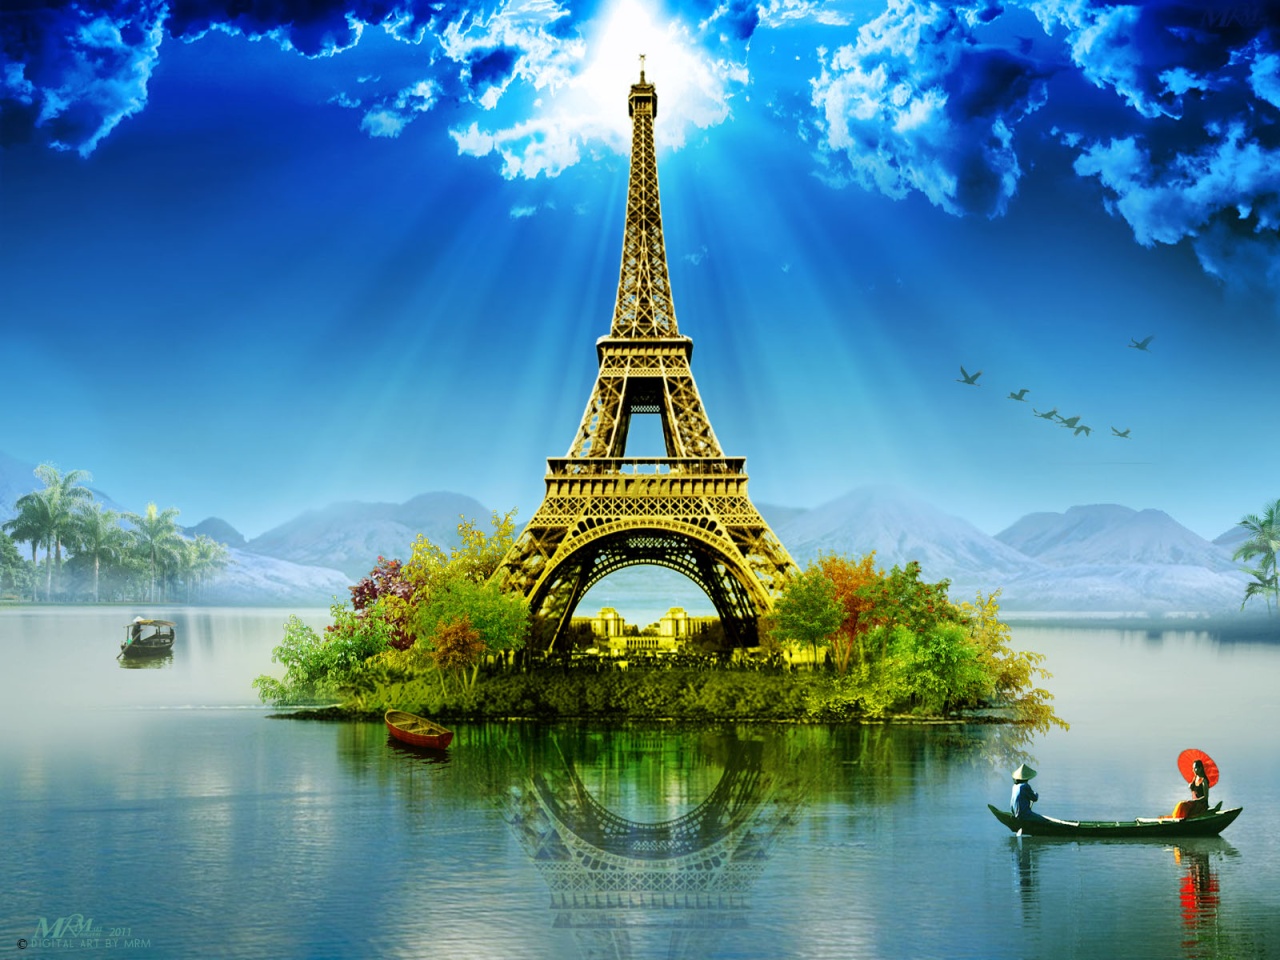 Paris Eiffel Tower Wallpaper Manipulation By Mrm IwallHD